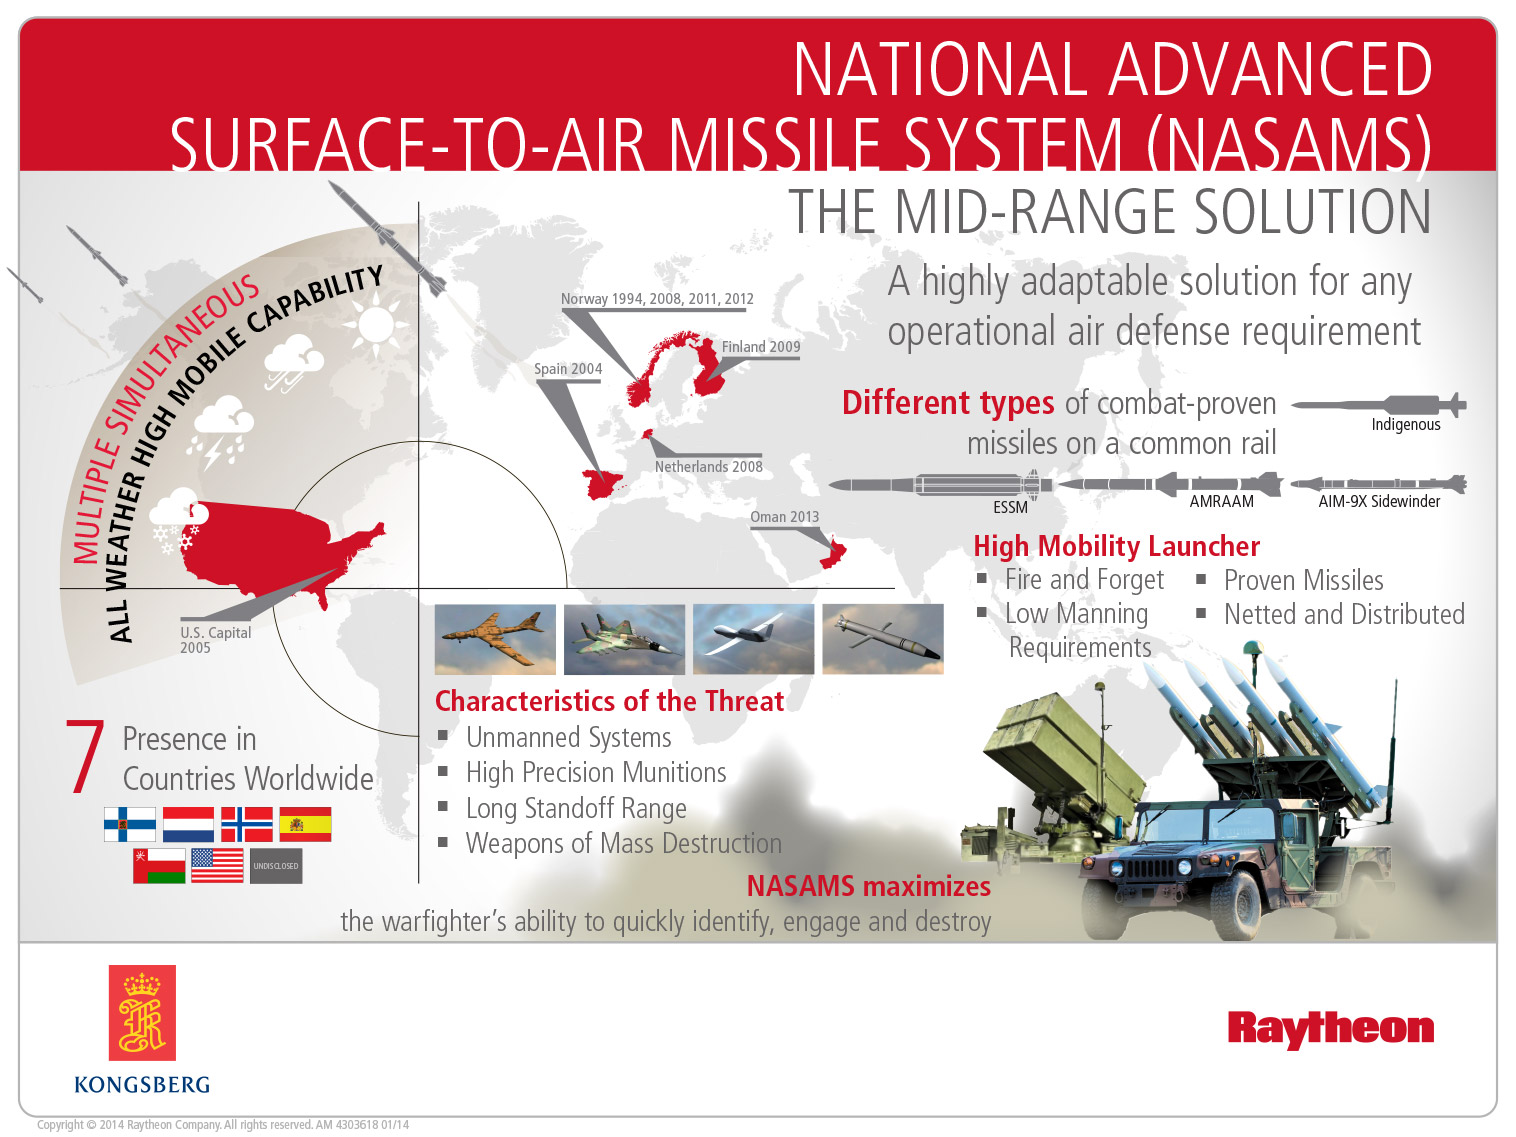 Kongsberg/Raytheon NASAMS air defense system